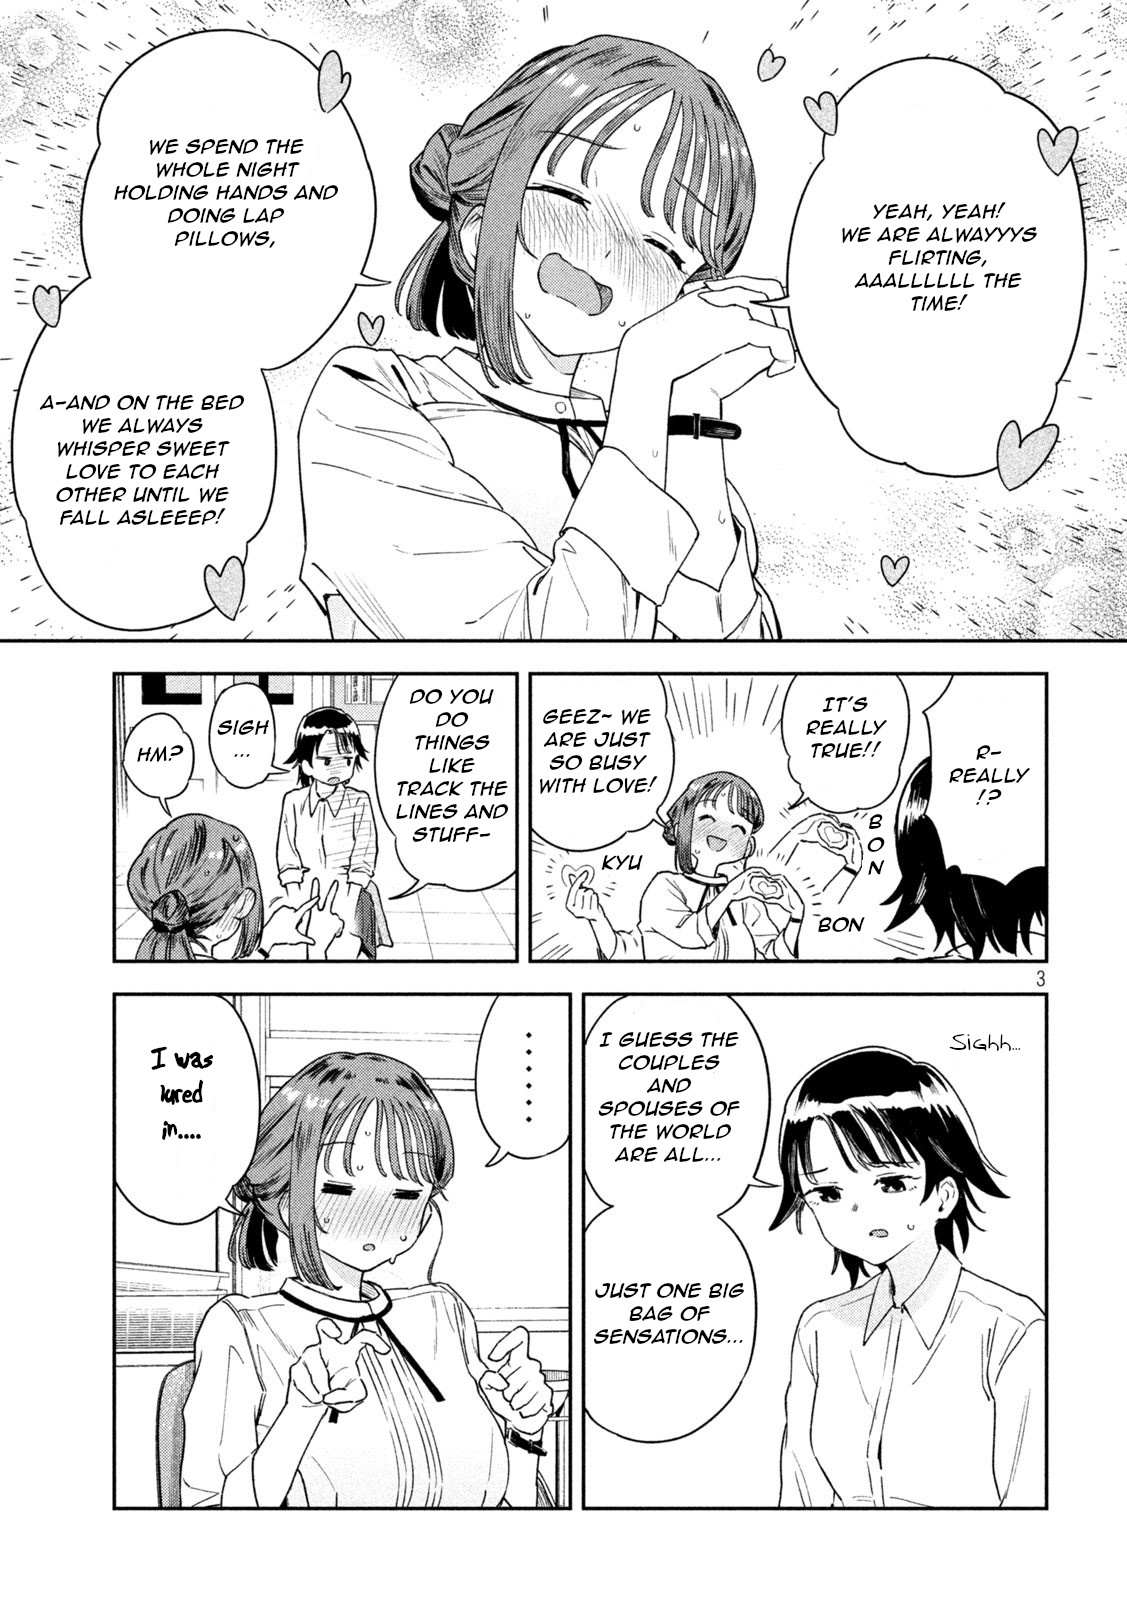 Miyo-Chan Sensei Said So - chapter 6 - #4